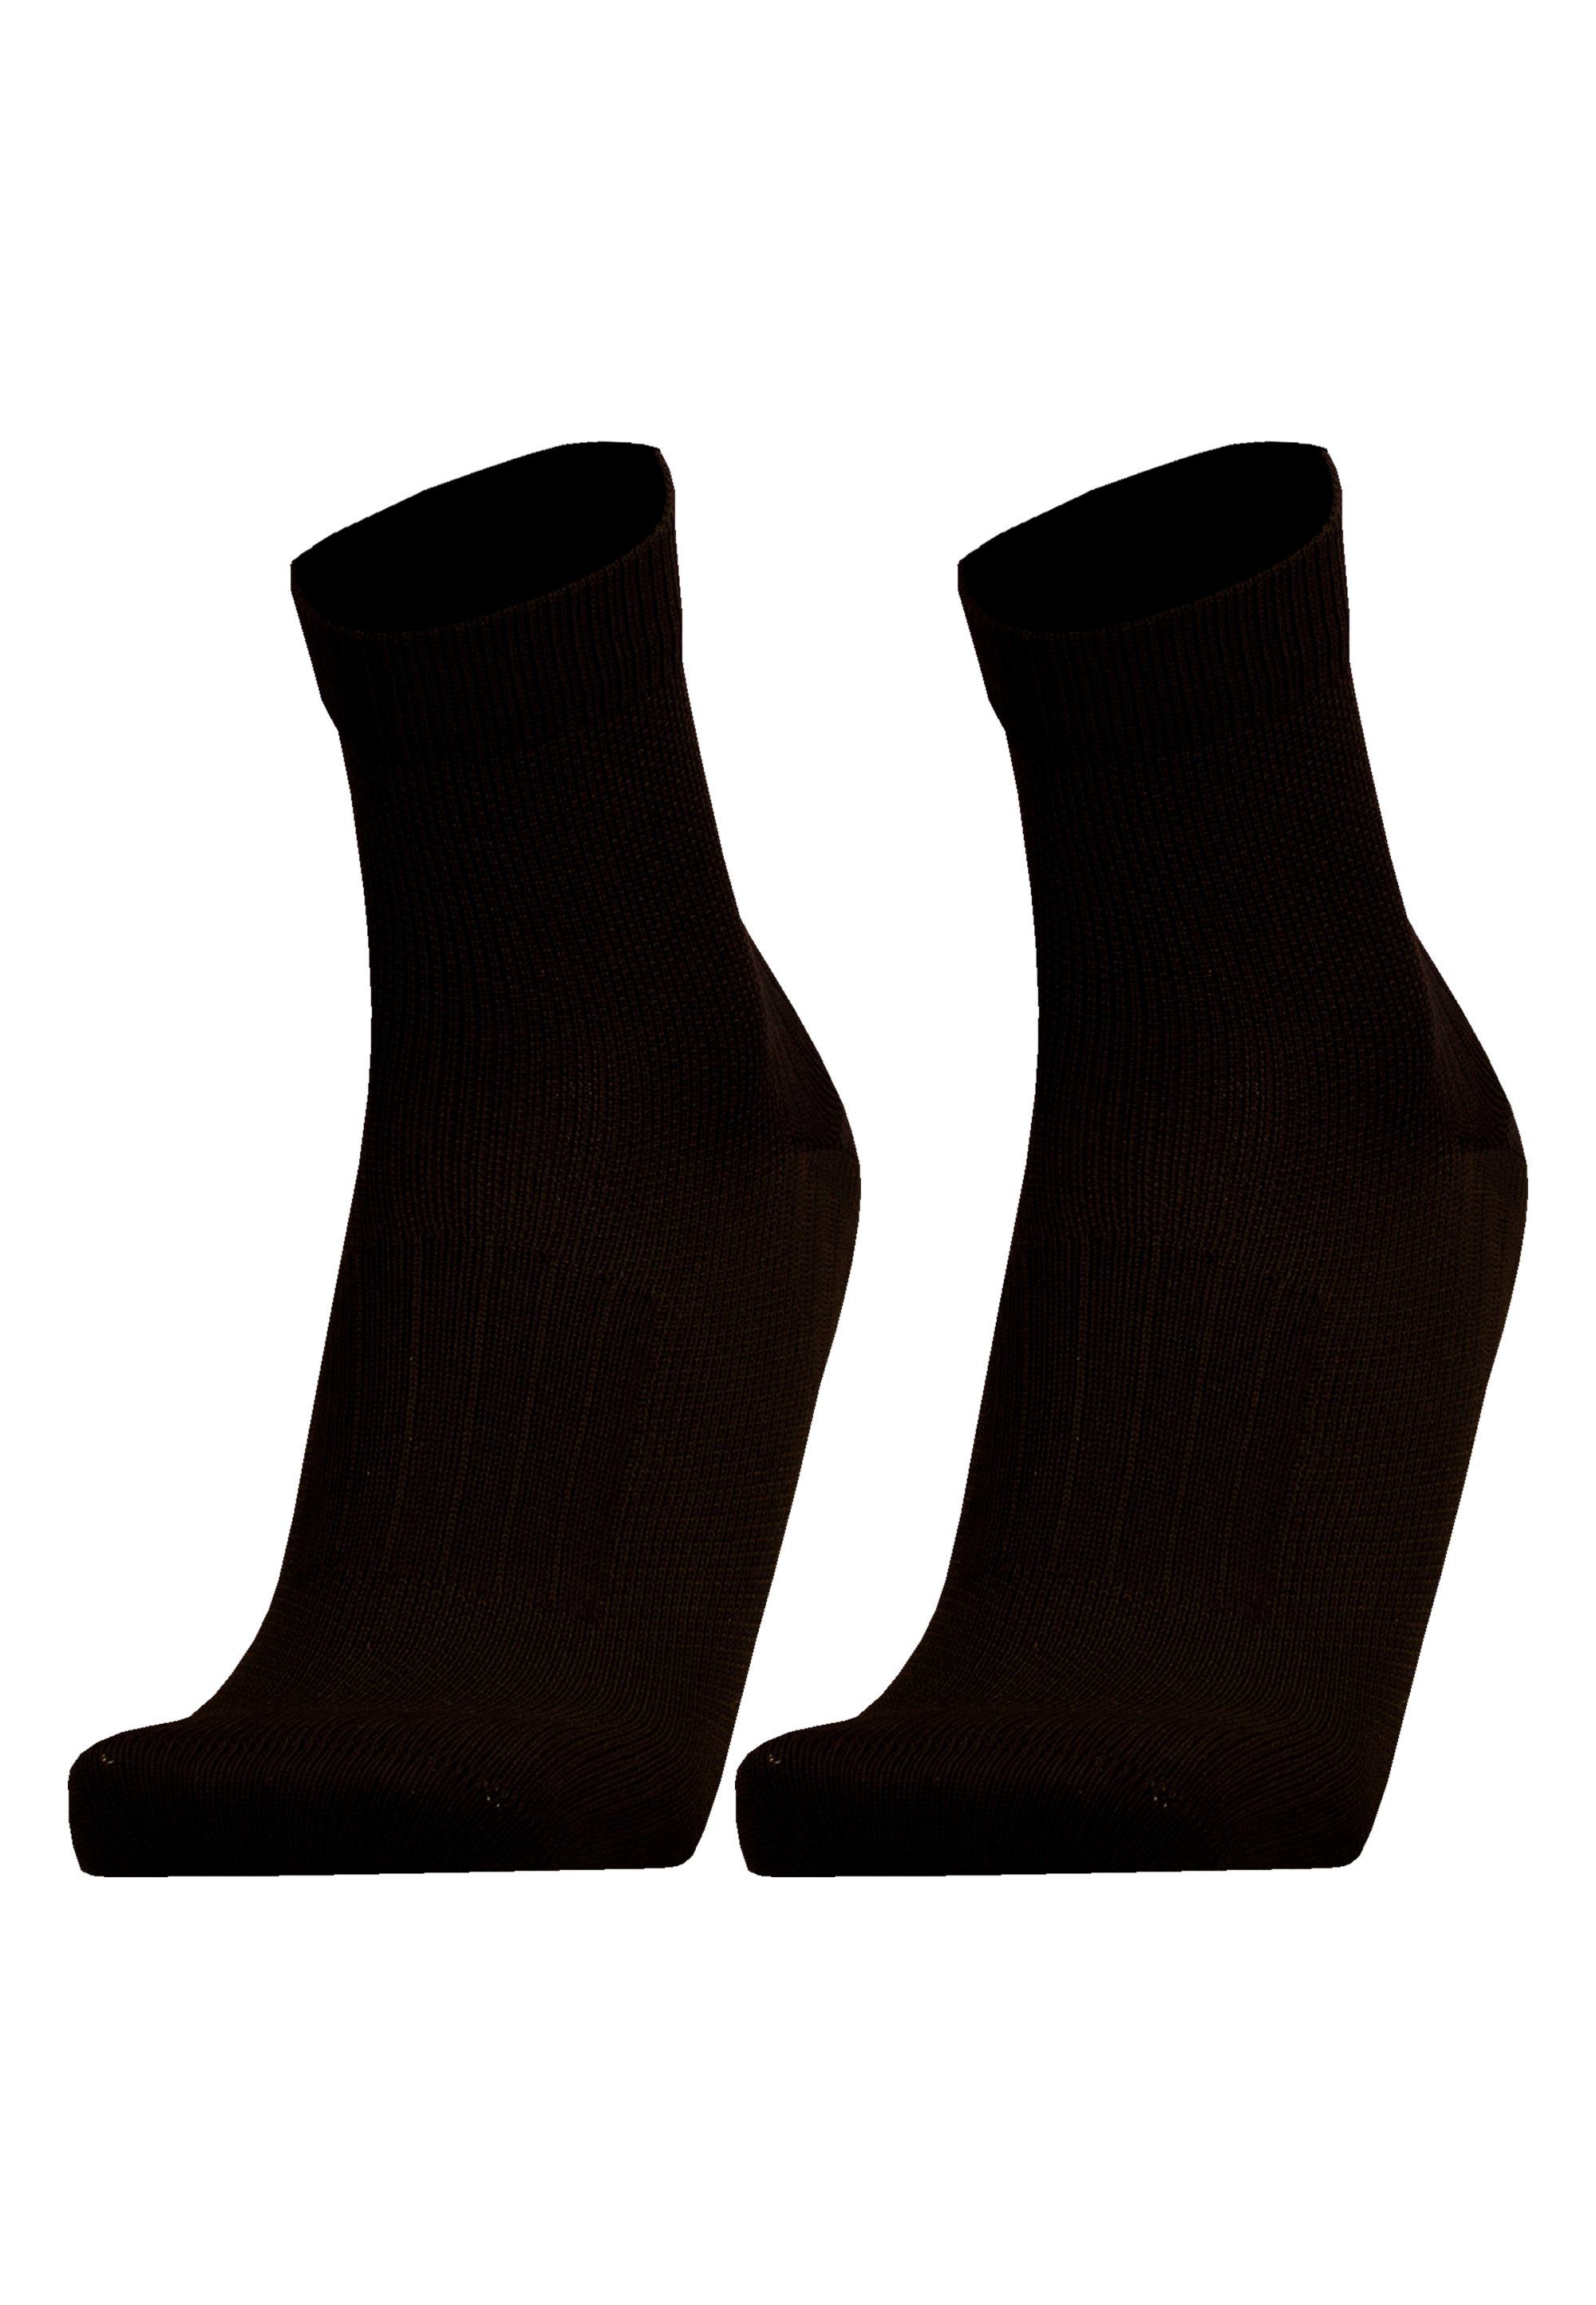 UphillSport Socken FRONT 2er Pack Rist schwarz (2-Paar) mit gepolstertem